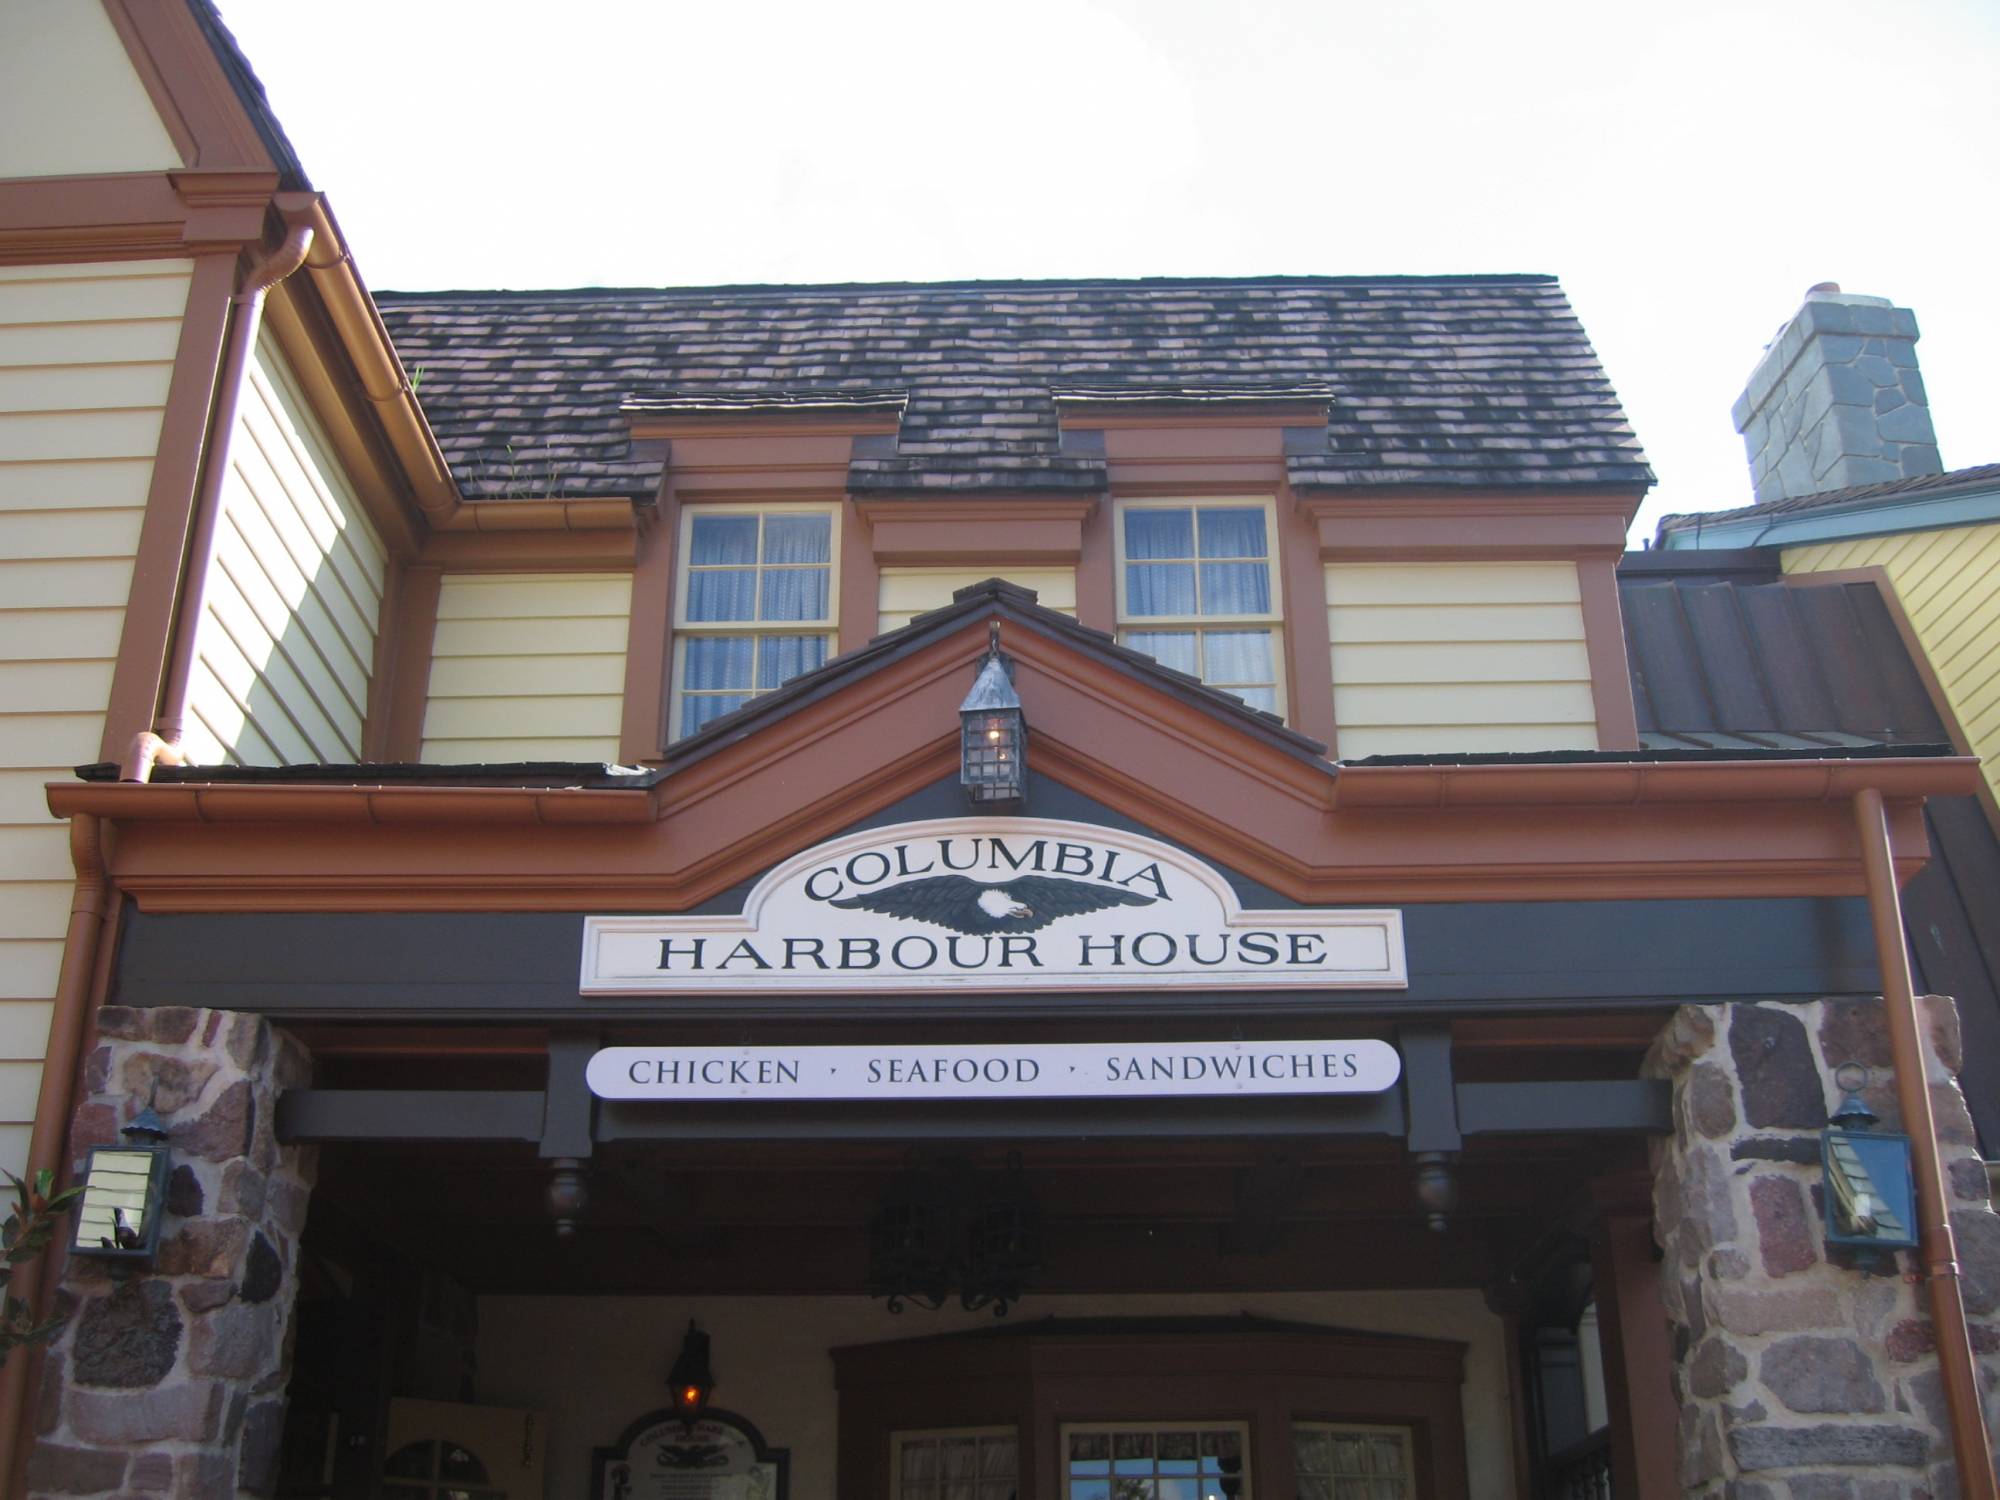 Magic Kingdom - Columbia Harbour House